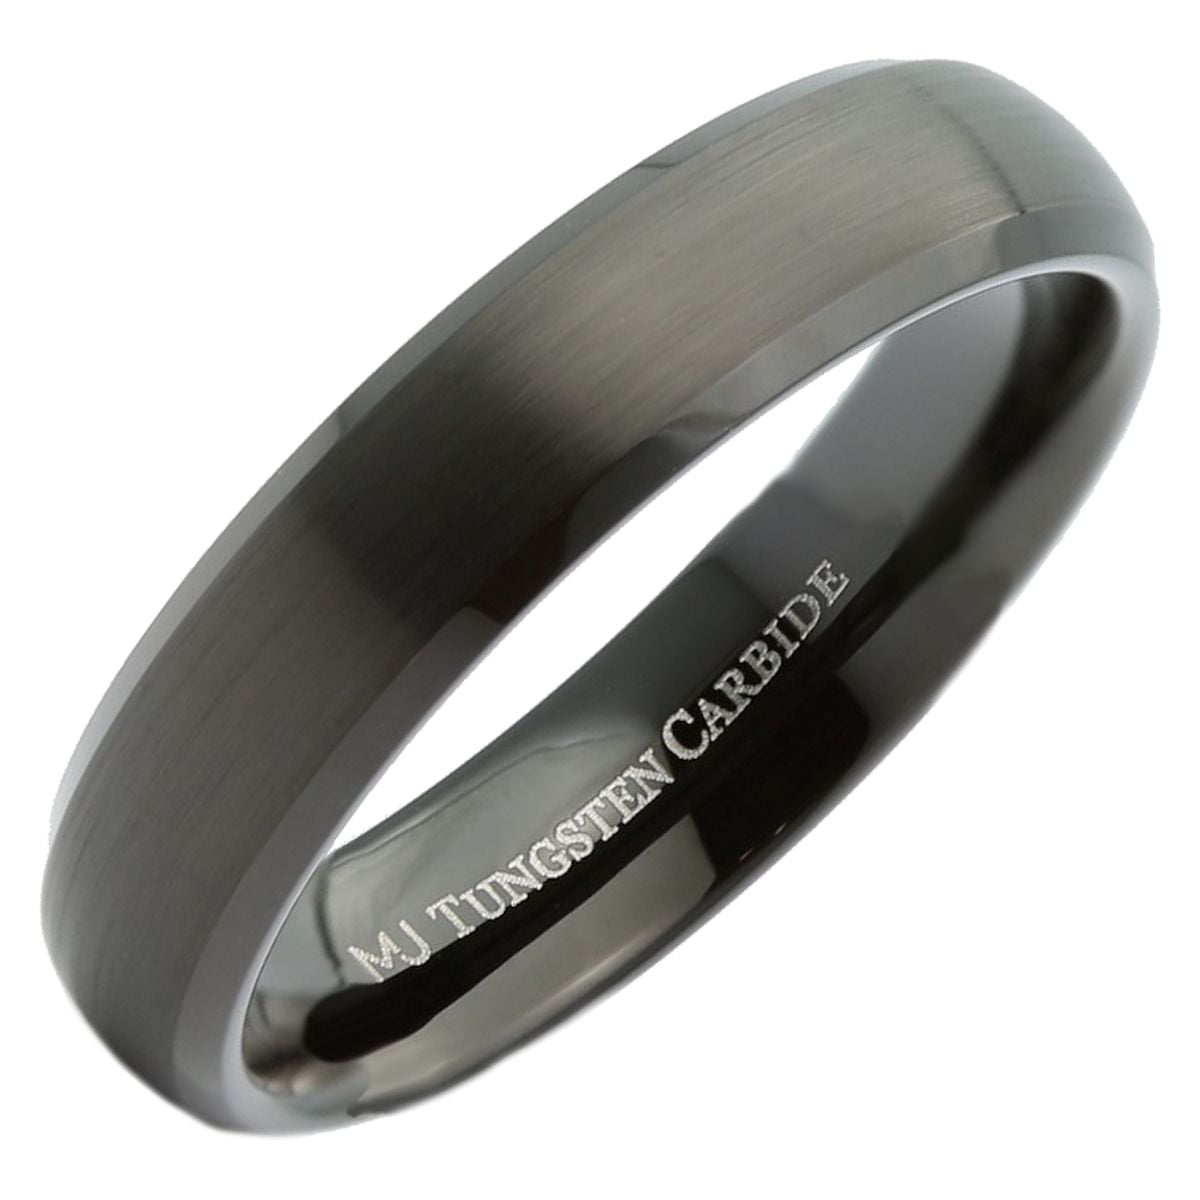 Tungsten carbide. Tungsten Carbide кольца. Карбид вольфрама кольцо. Кольца карбид вольфрама Караджи. Кольца из молибдена черные Tungsten Carbide.